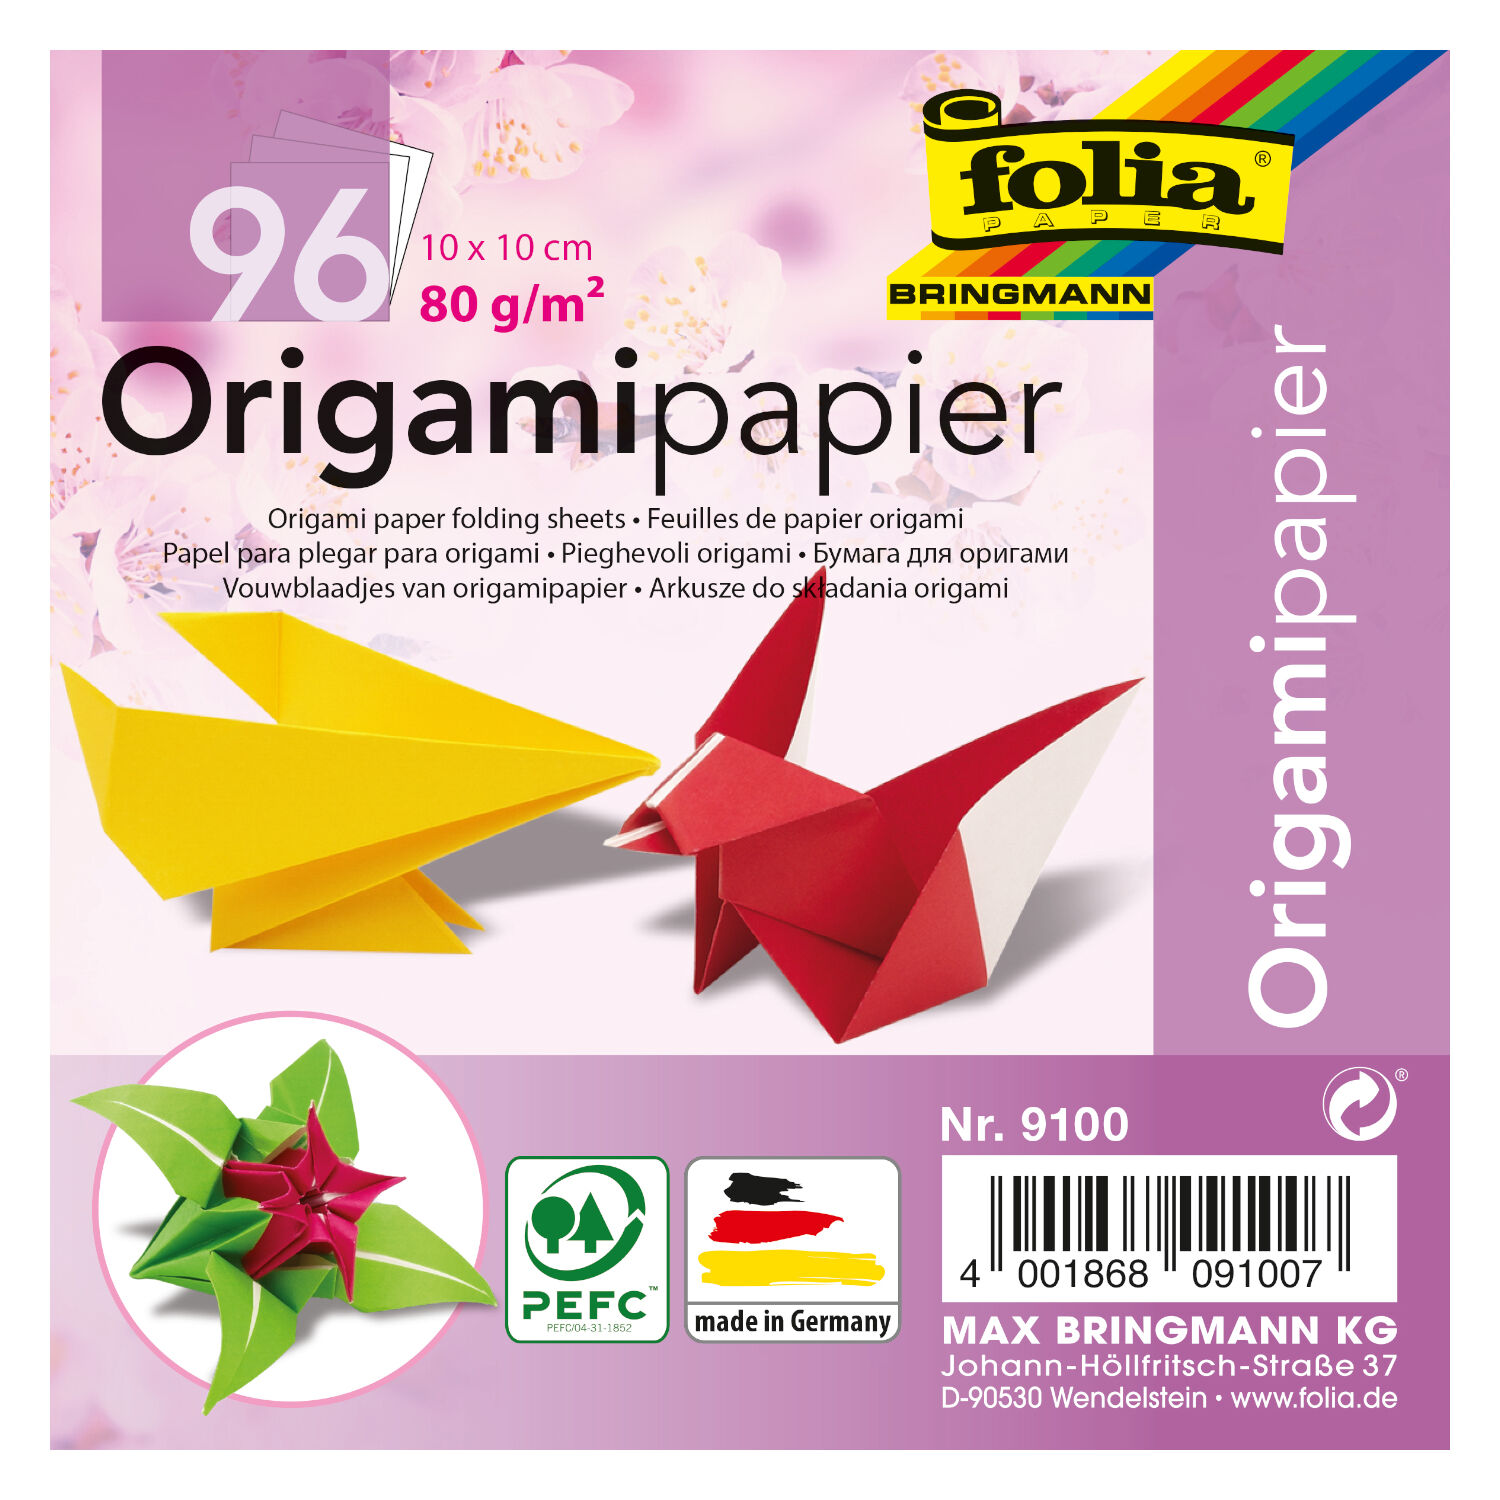 Origamipapier 10x10cm, 96 Blatt, 80g/m